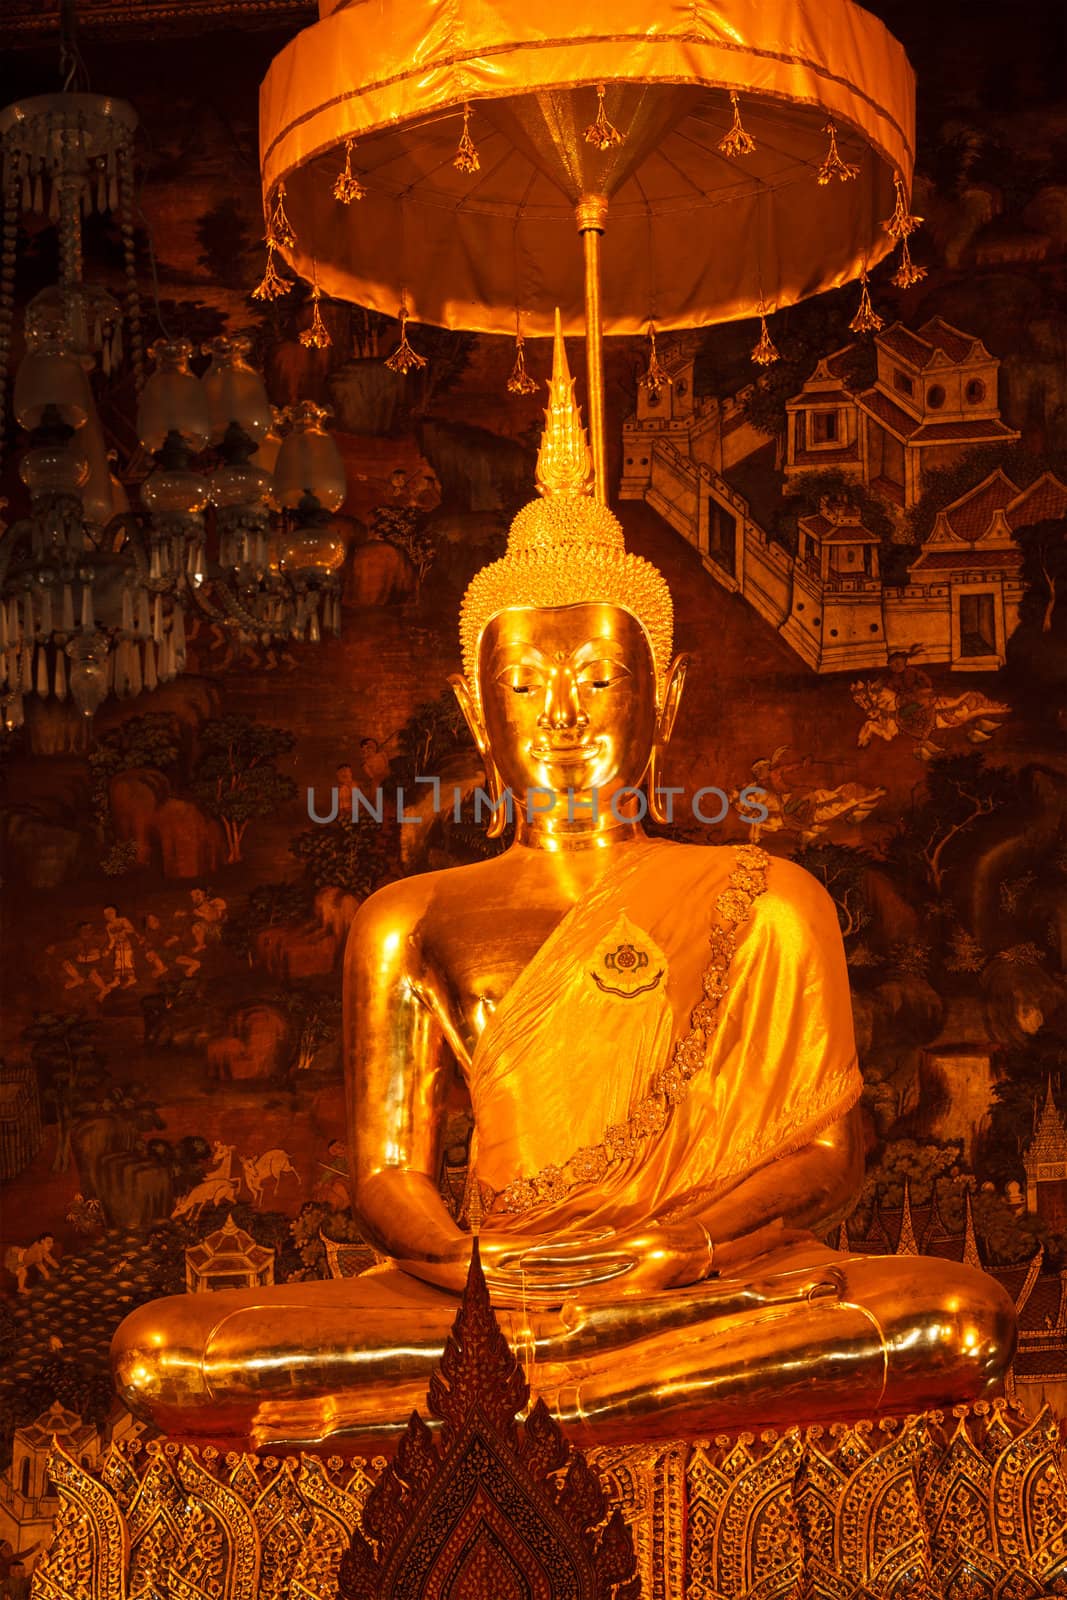 Sitting Buddha statue close up, Thailand by dimol